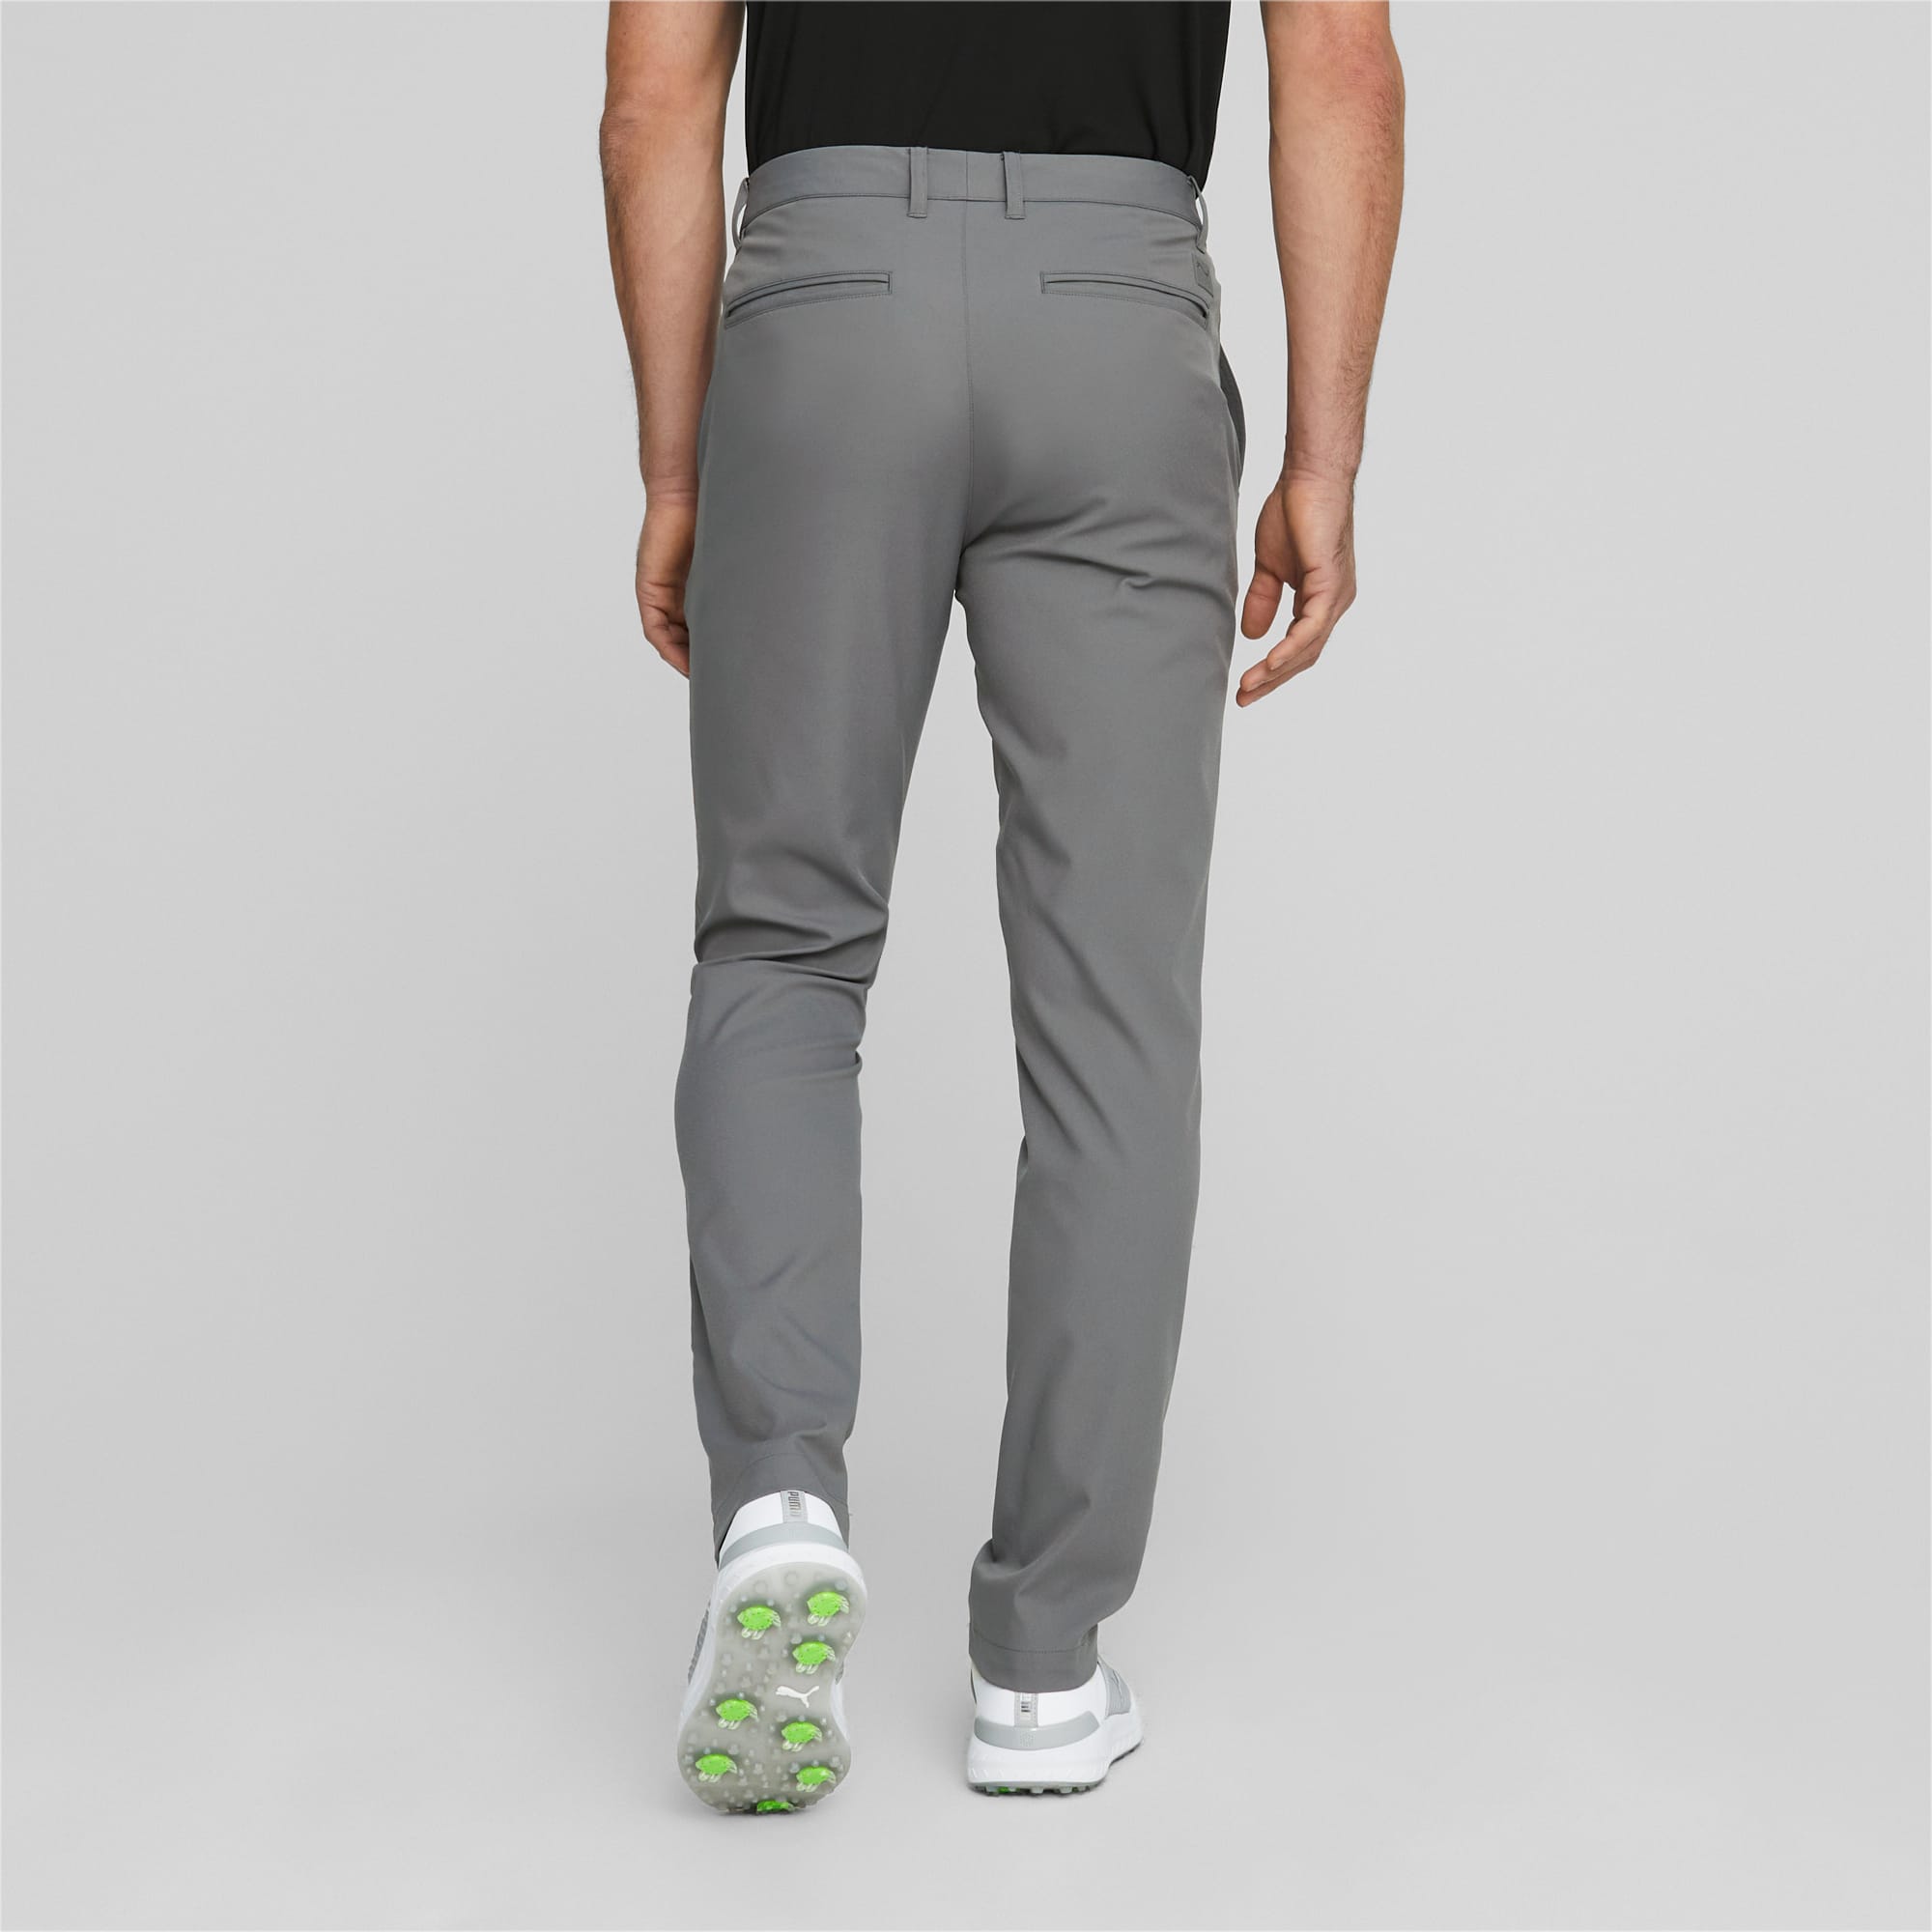 PUMA Dealer Tailored Golf Pants Men, Slate Sky, Size 33/30, Clothing